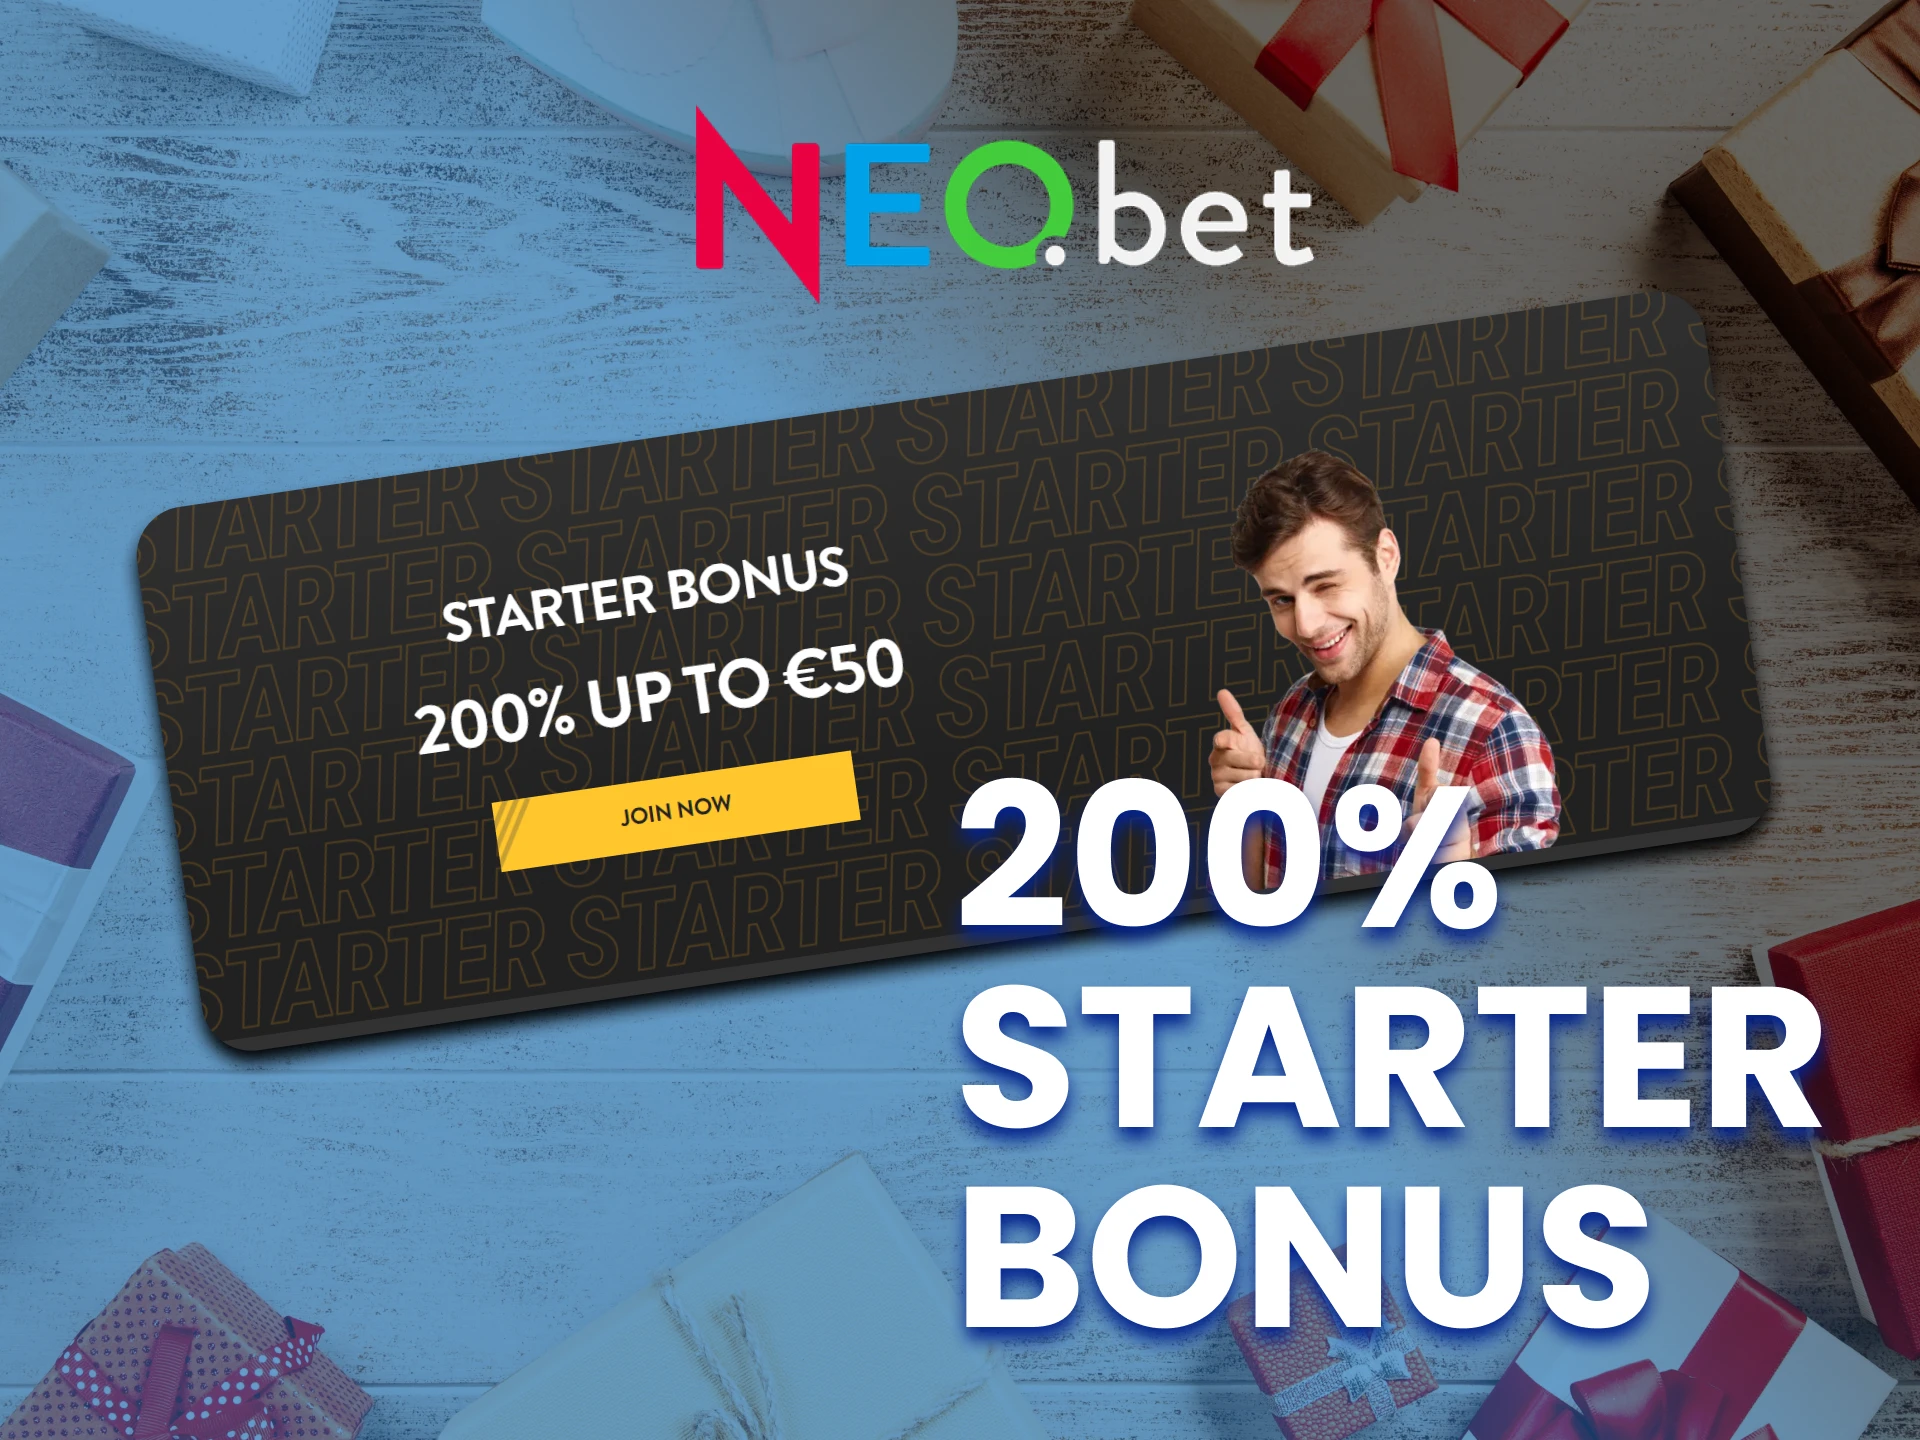 NEO.bet app offers its players the best starter bonus.